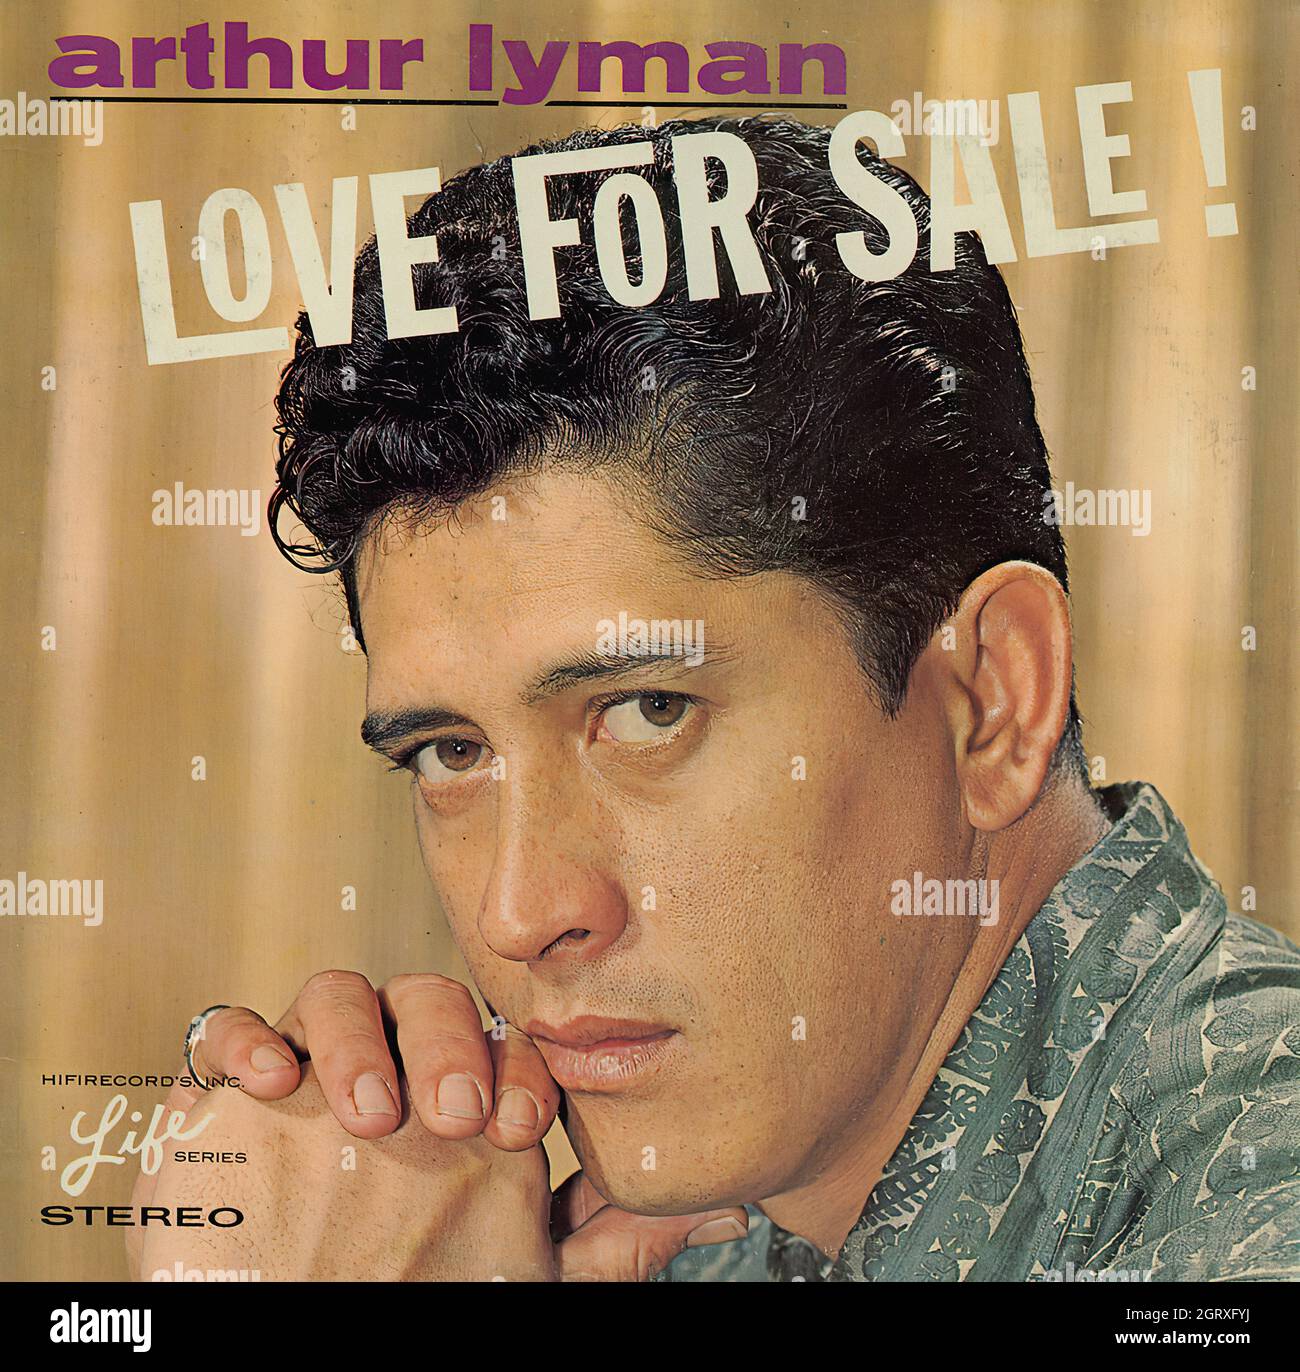 Arthur Lyman - Love For Sale! - Vintage Musical Vinyl Album Stock Photo